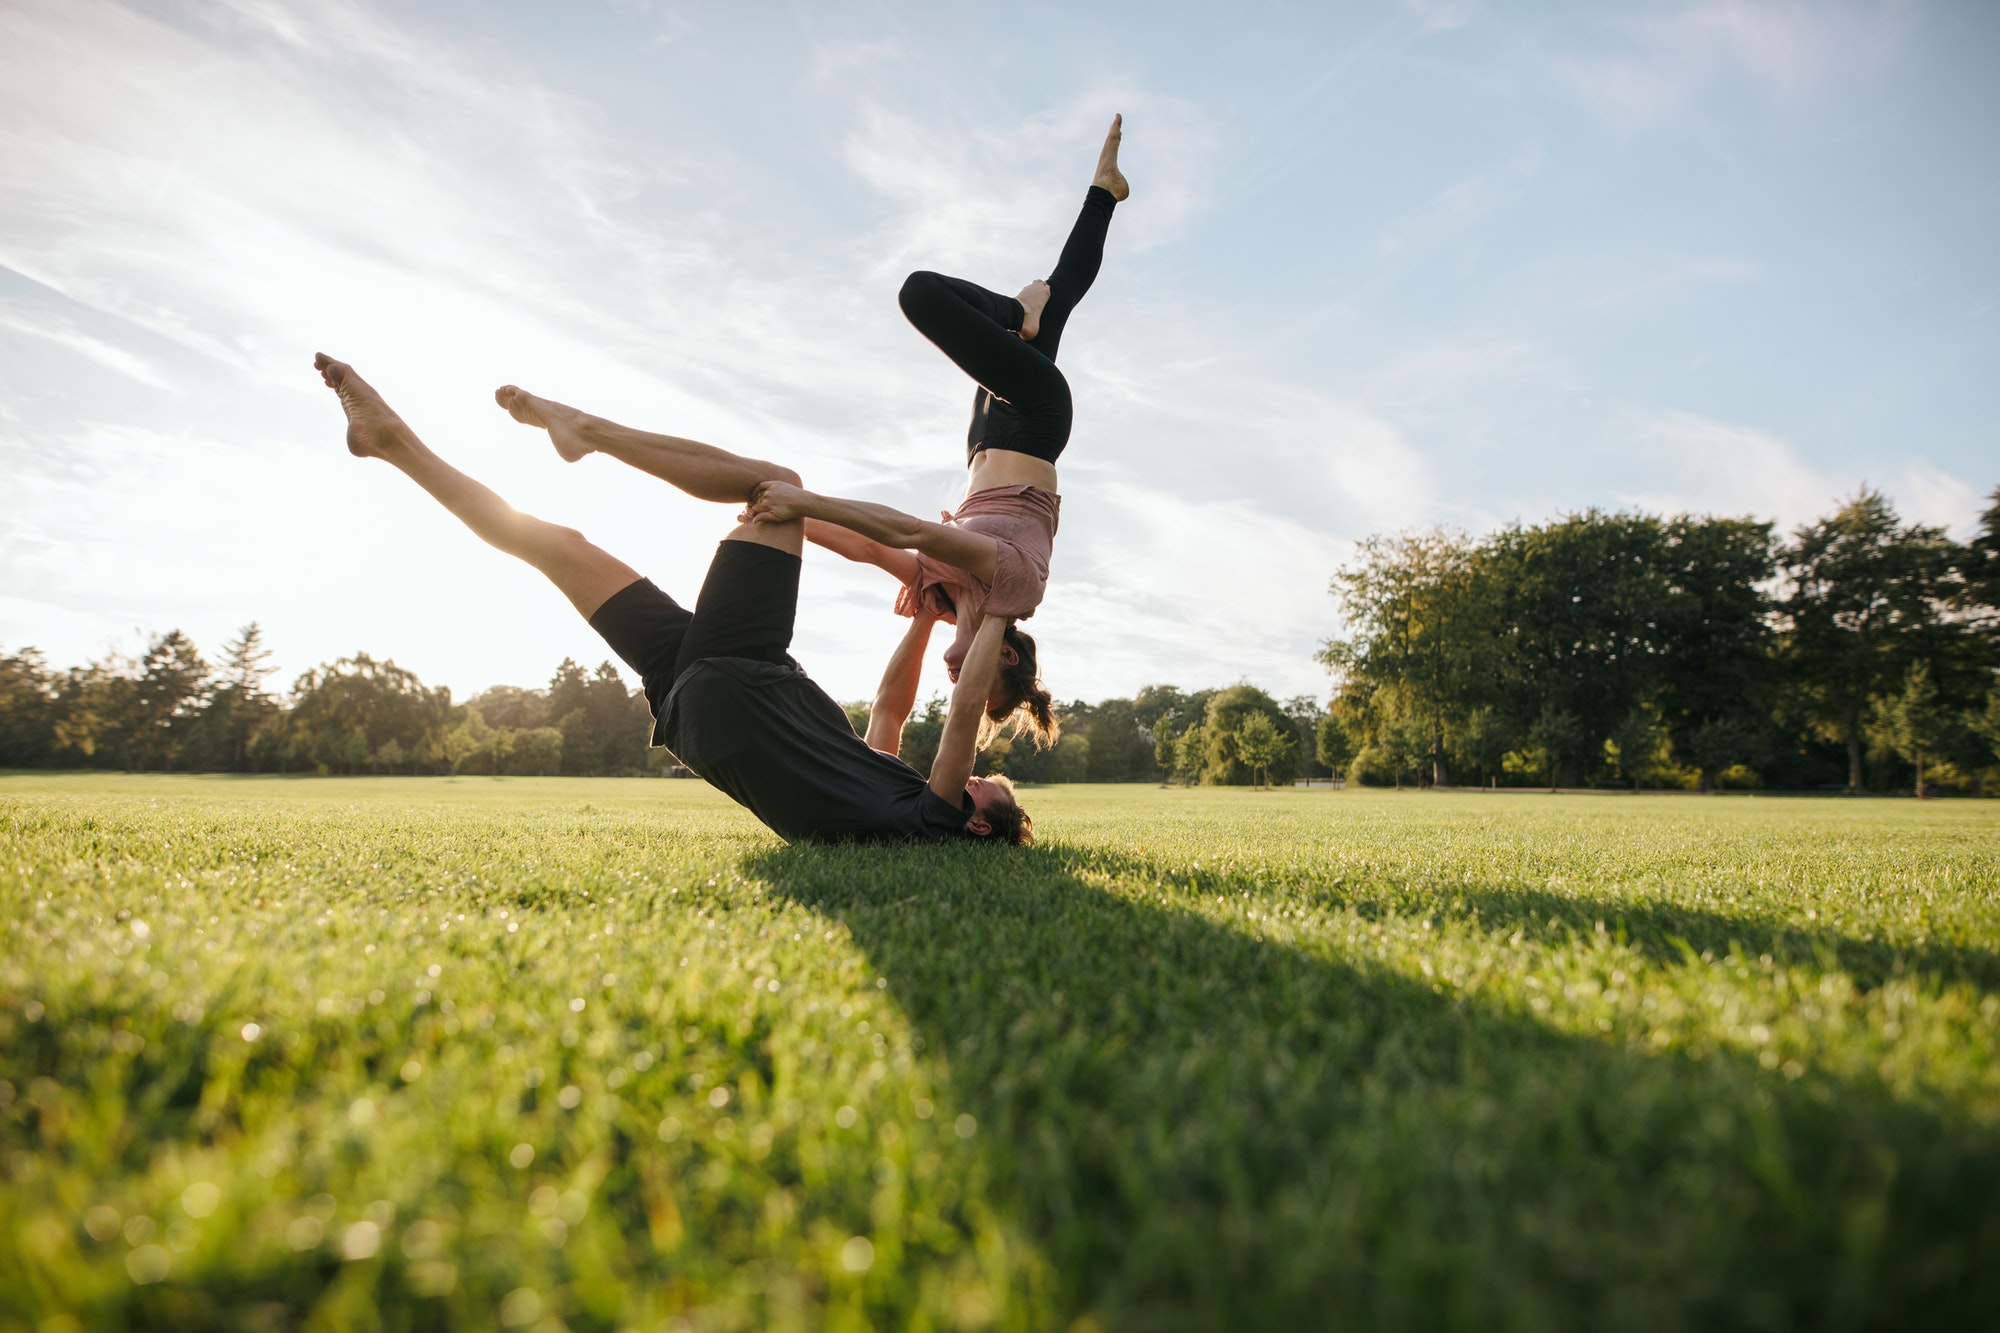 Healthy young couple doing acro yoga on grass